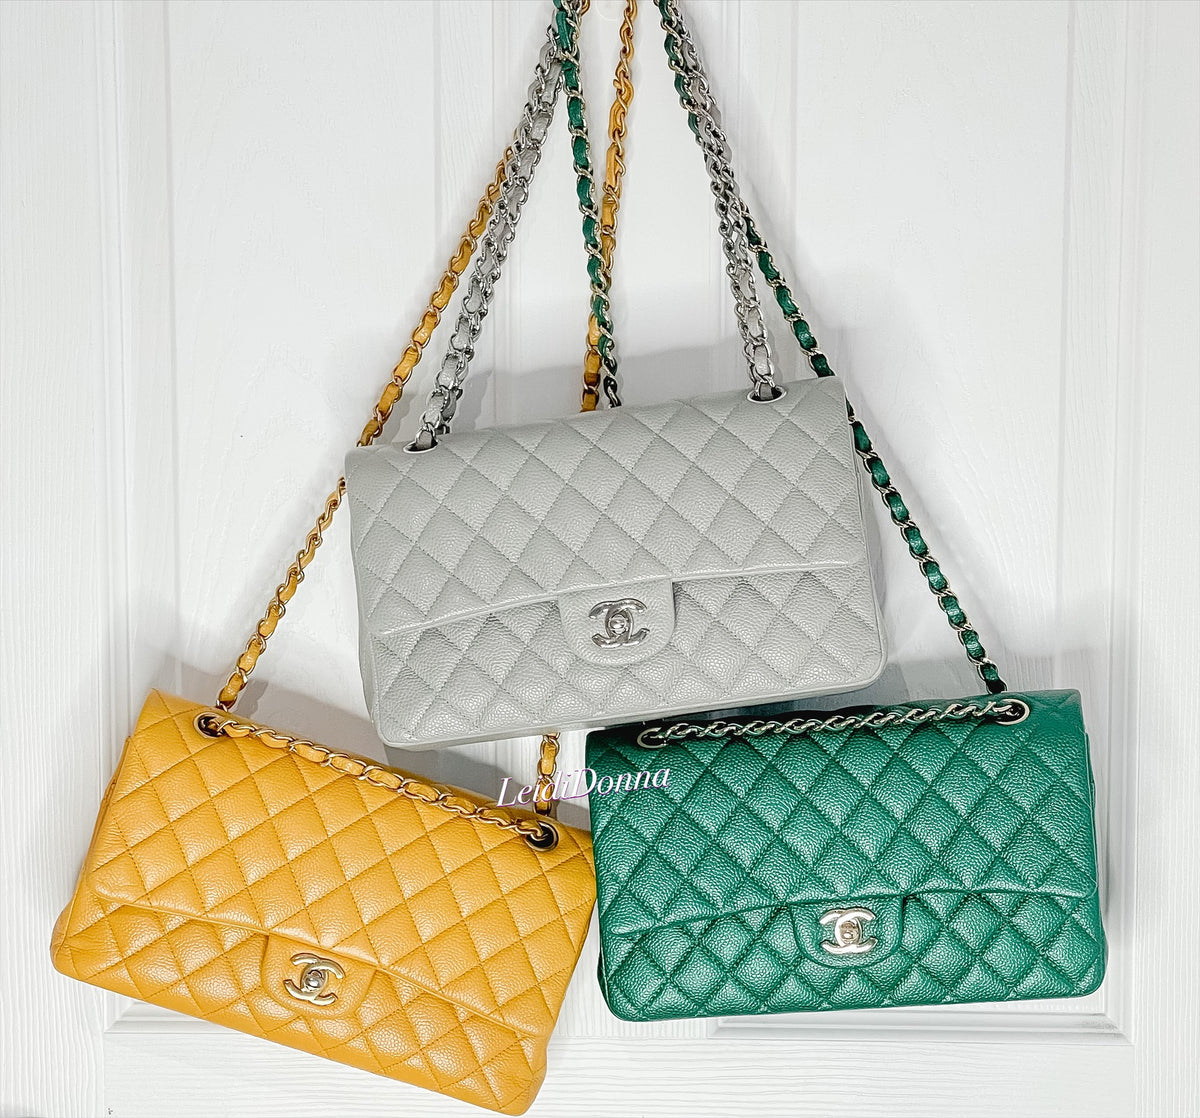 Chanel Information Guide  Chanel bag, Classic handbags, Bags